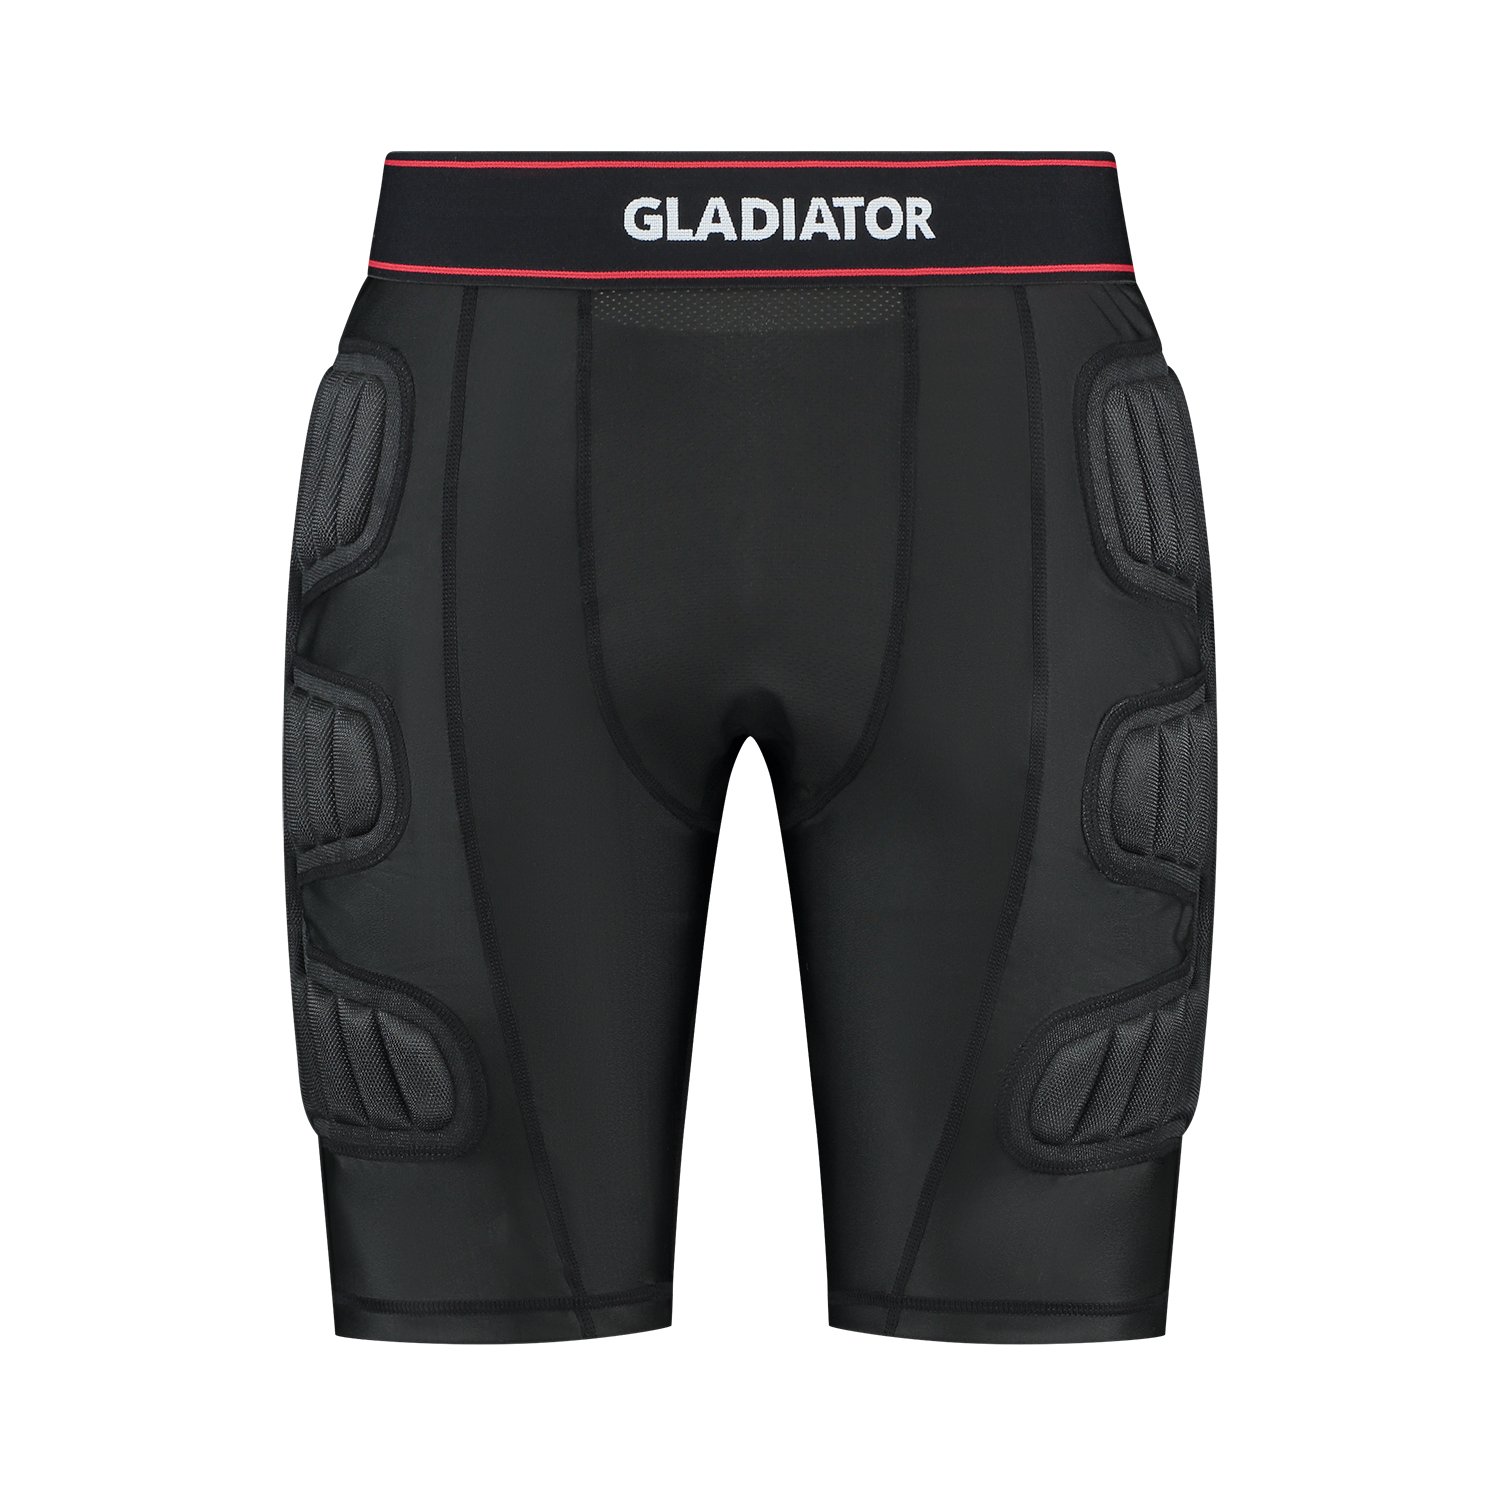 gladiator goalkeeper protection shorts for sale